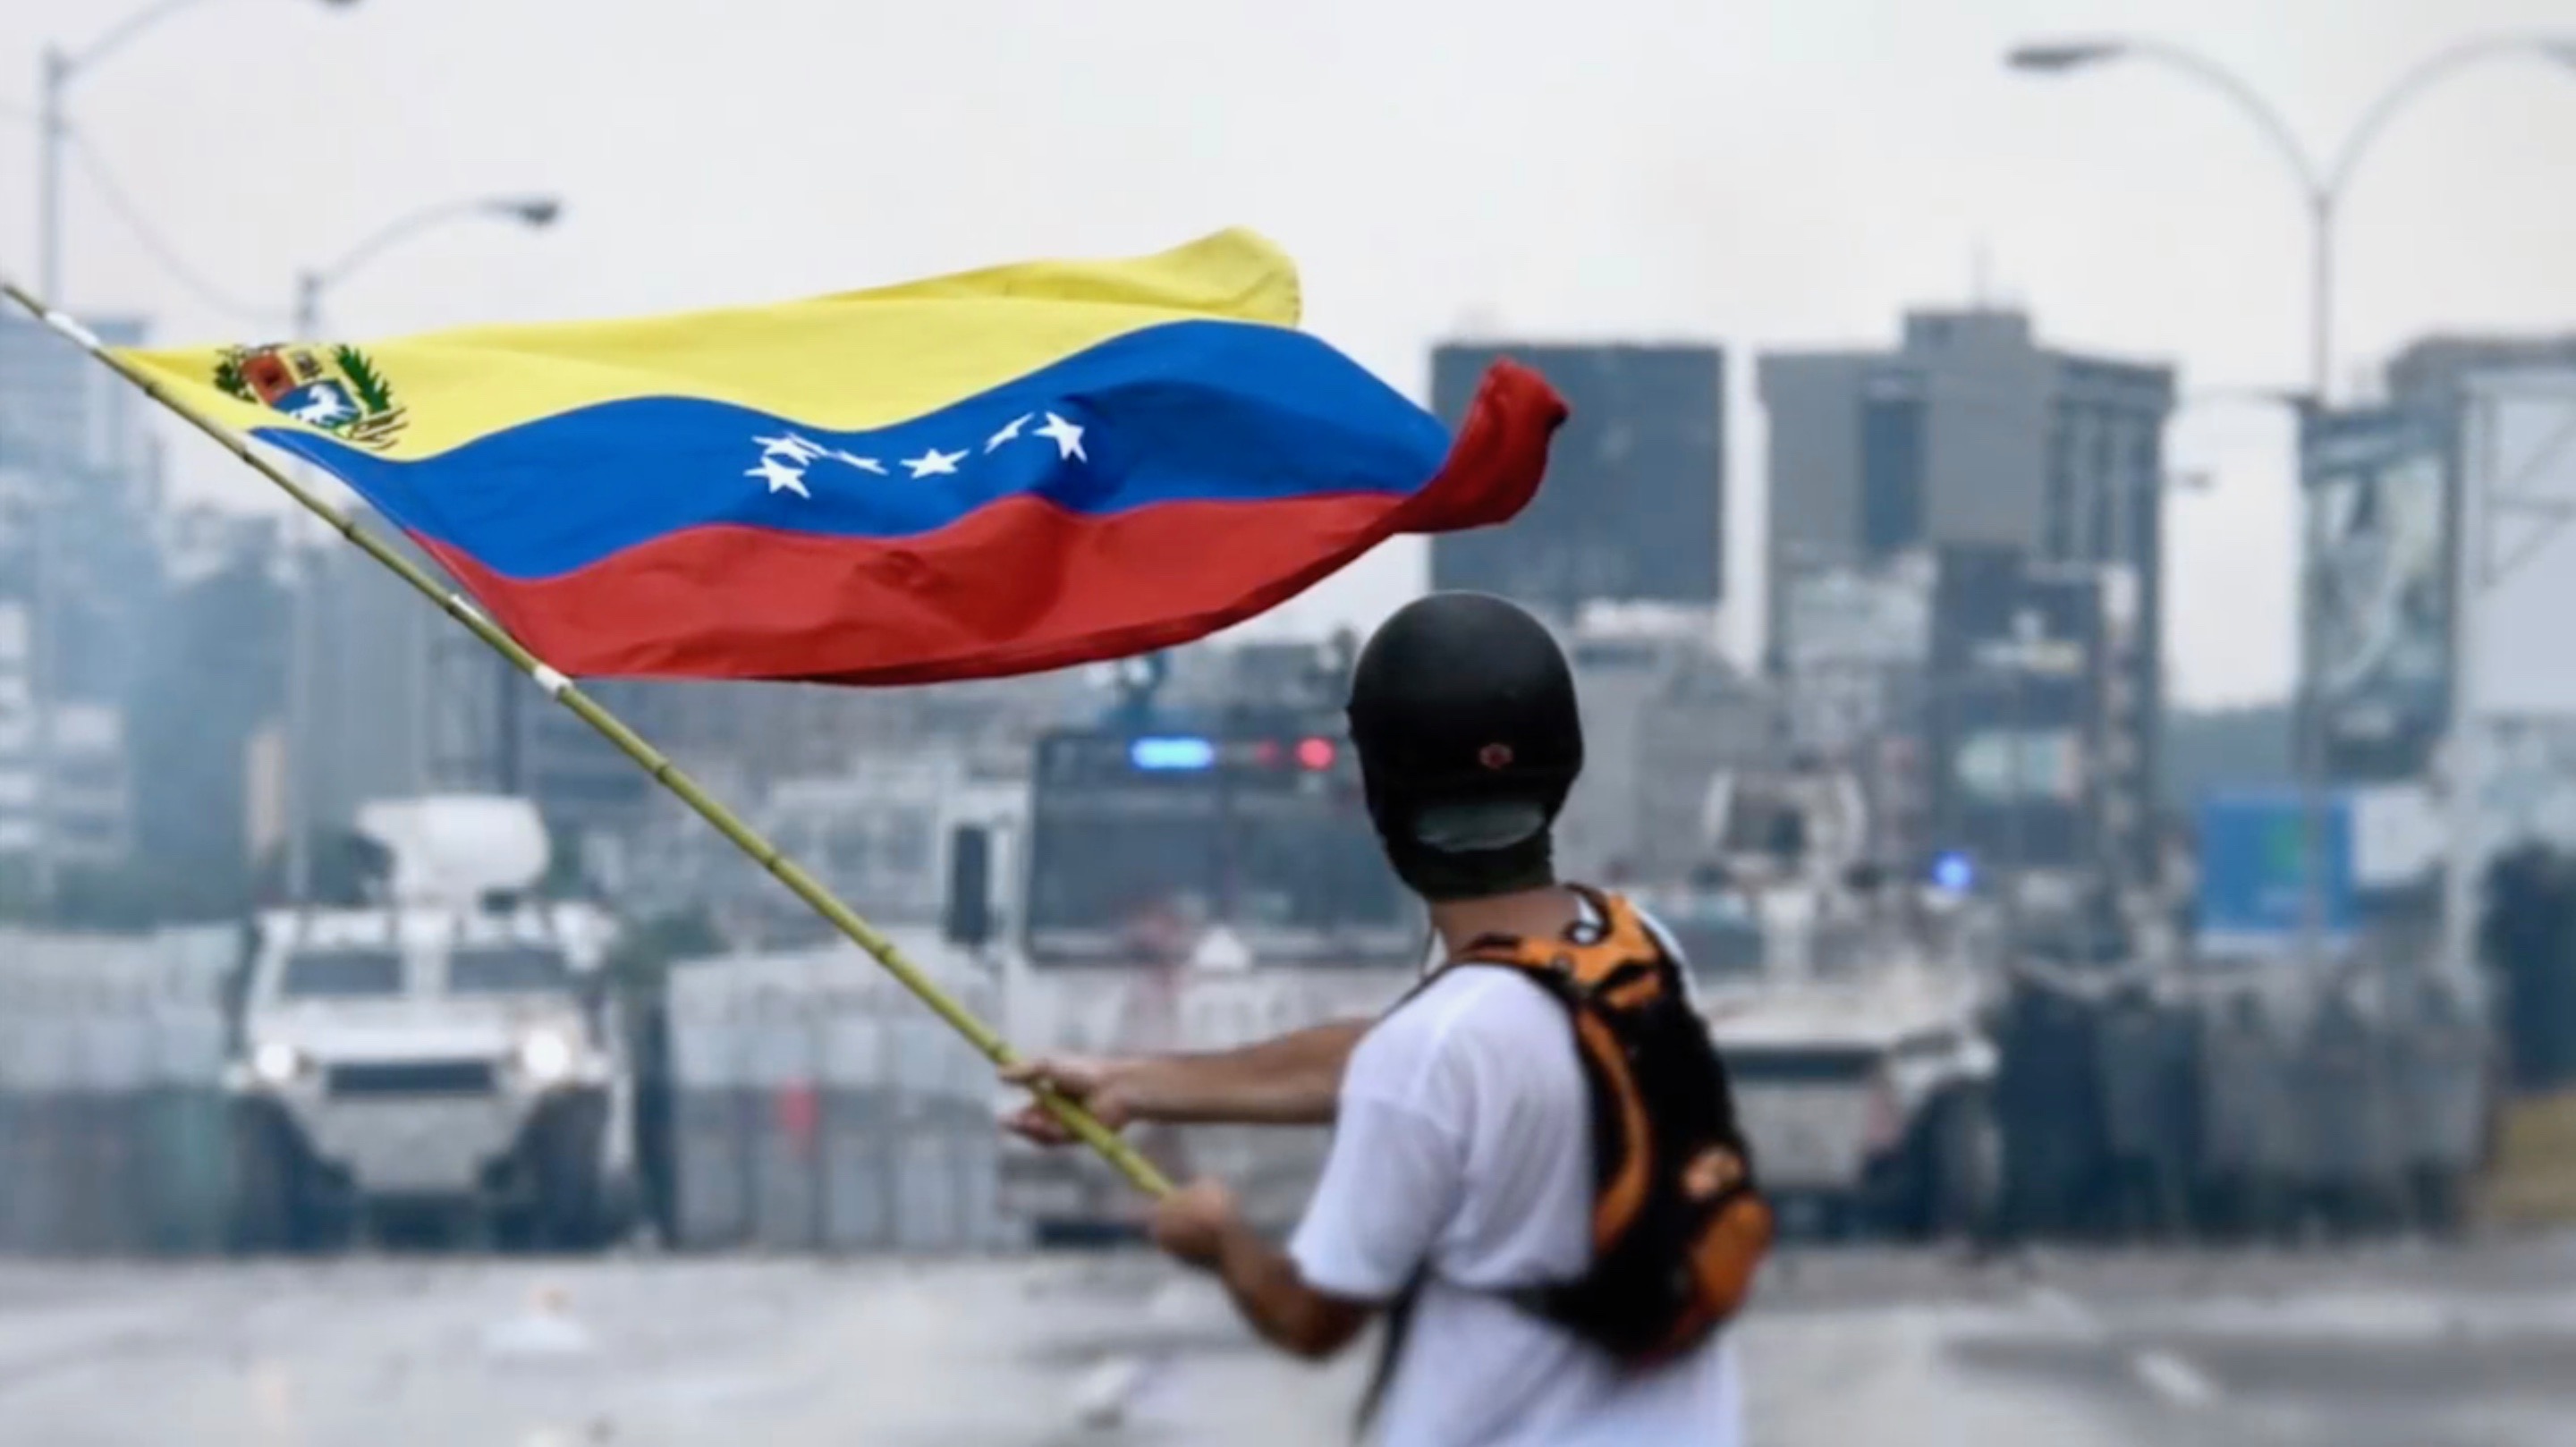 What You Should Know About the Venezuela Crisis